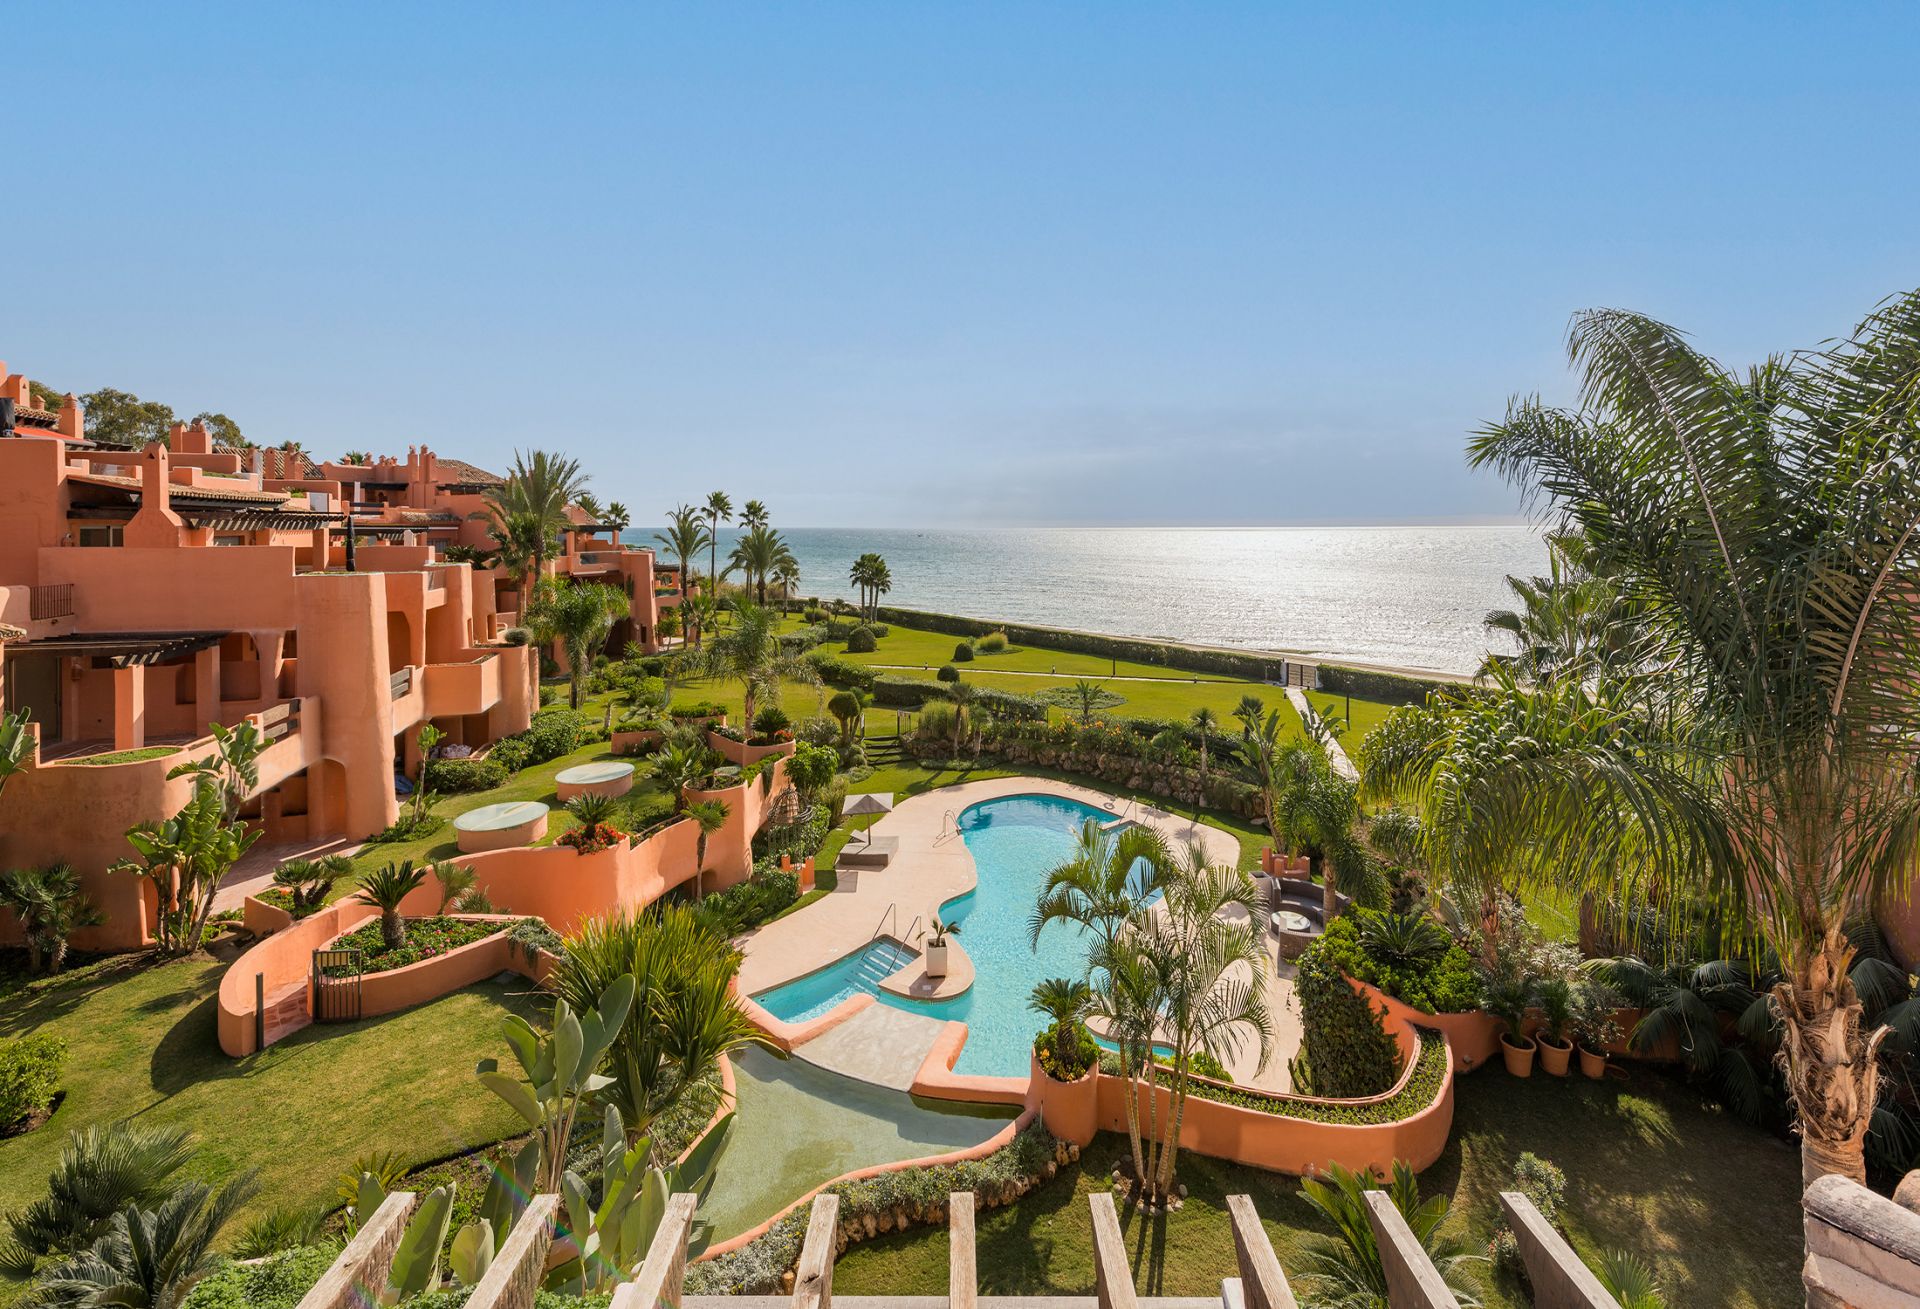 Frontline beach luxury penthouse in Los Monteros Marbella | Engel & Völkers Marbella